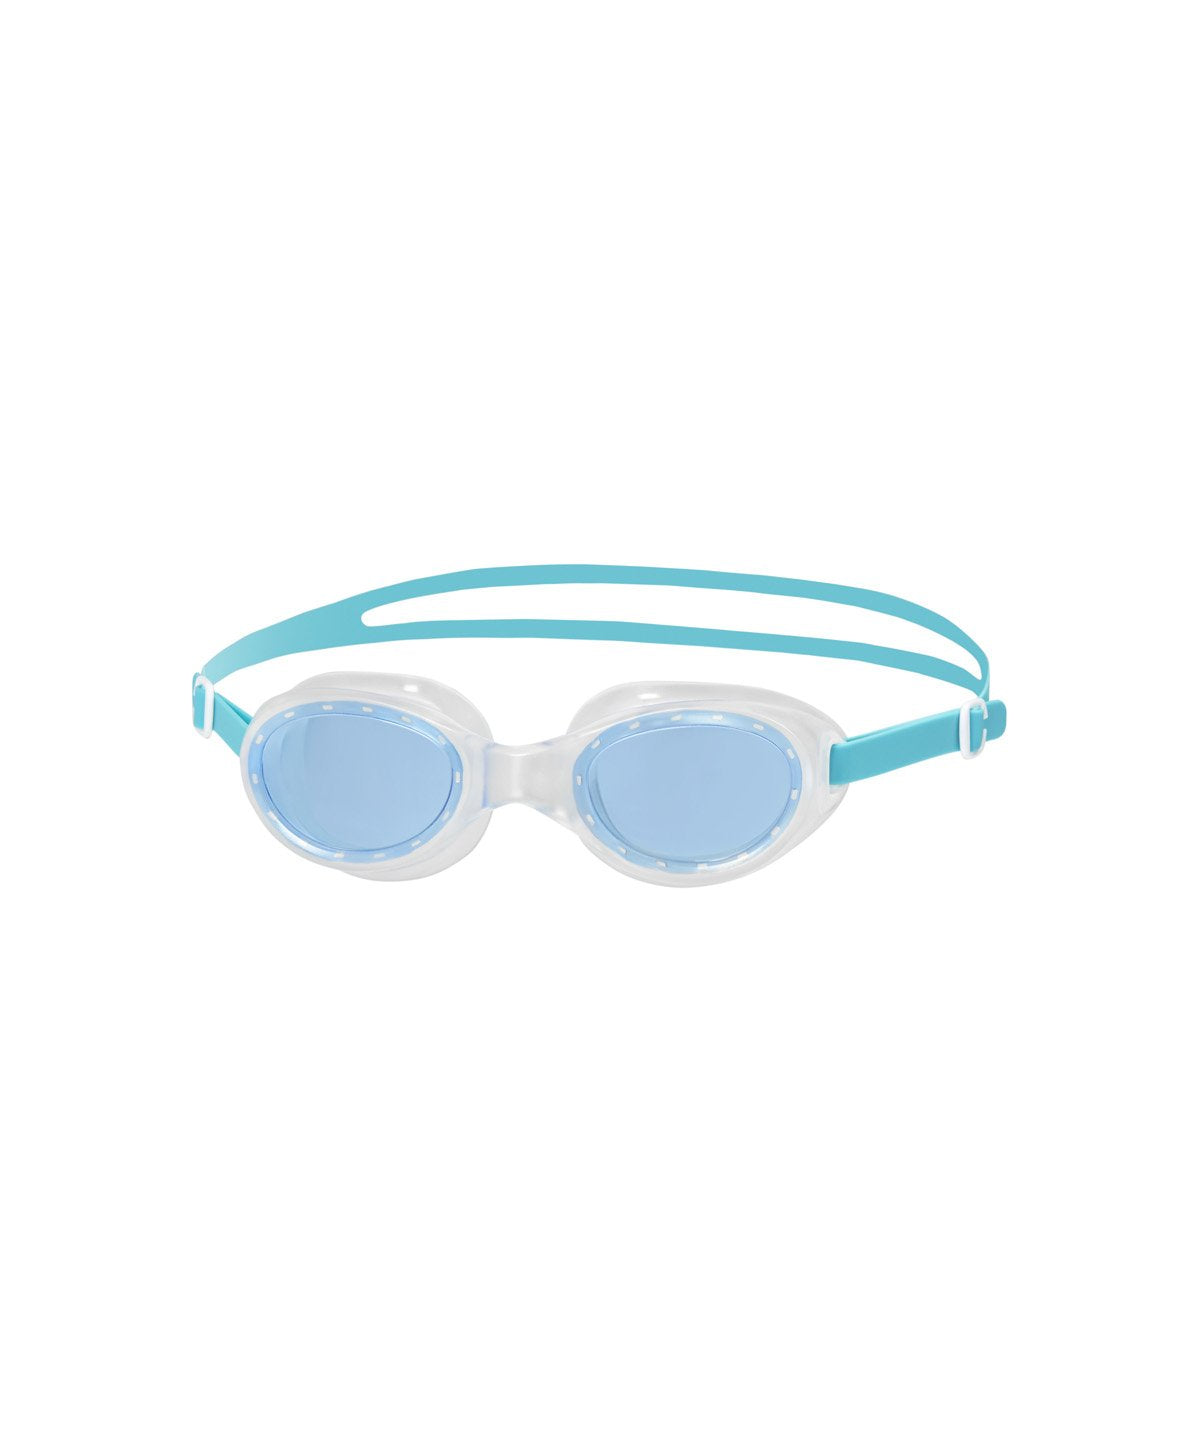 Speedo Futra Classic Swimming Goggles, Adult Free Size (Green/Blue) - Best Price online Prokicksports.com